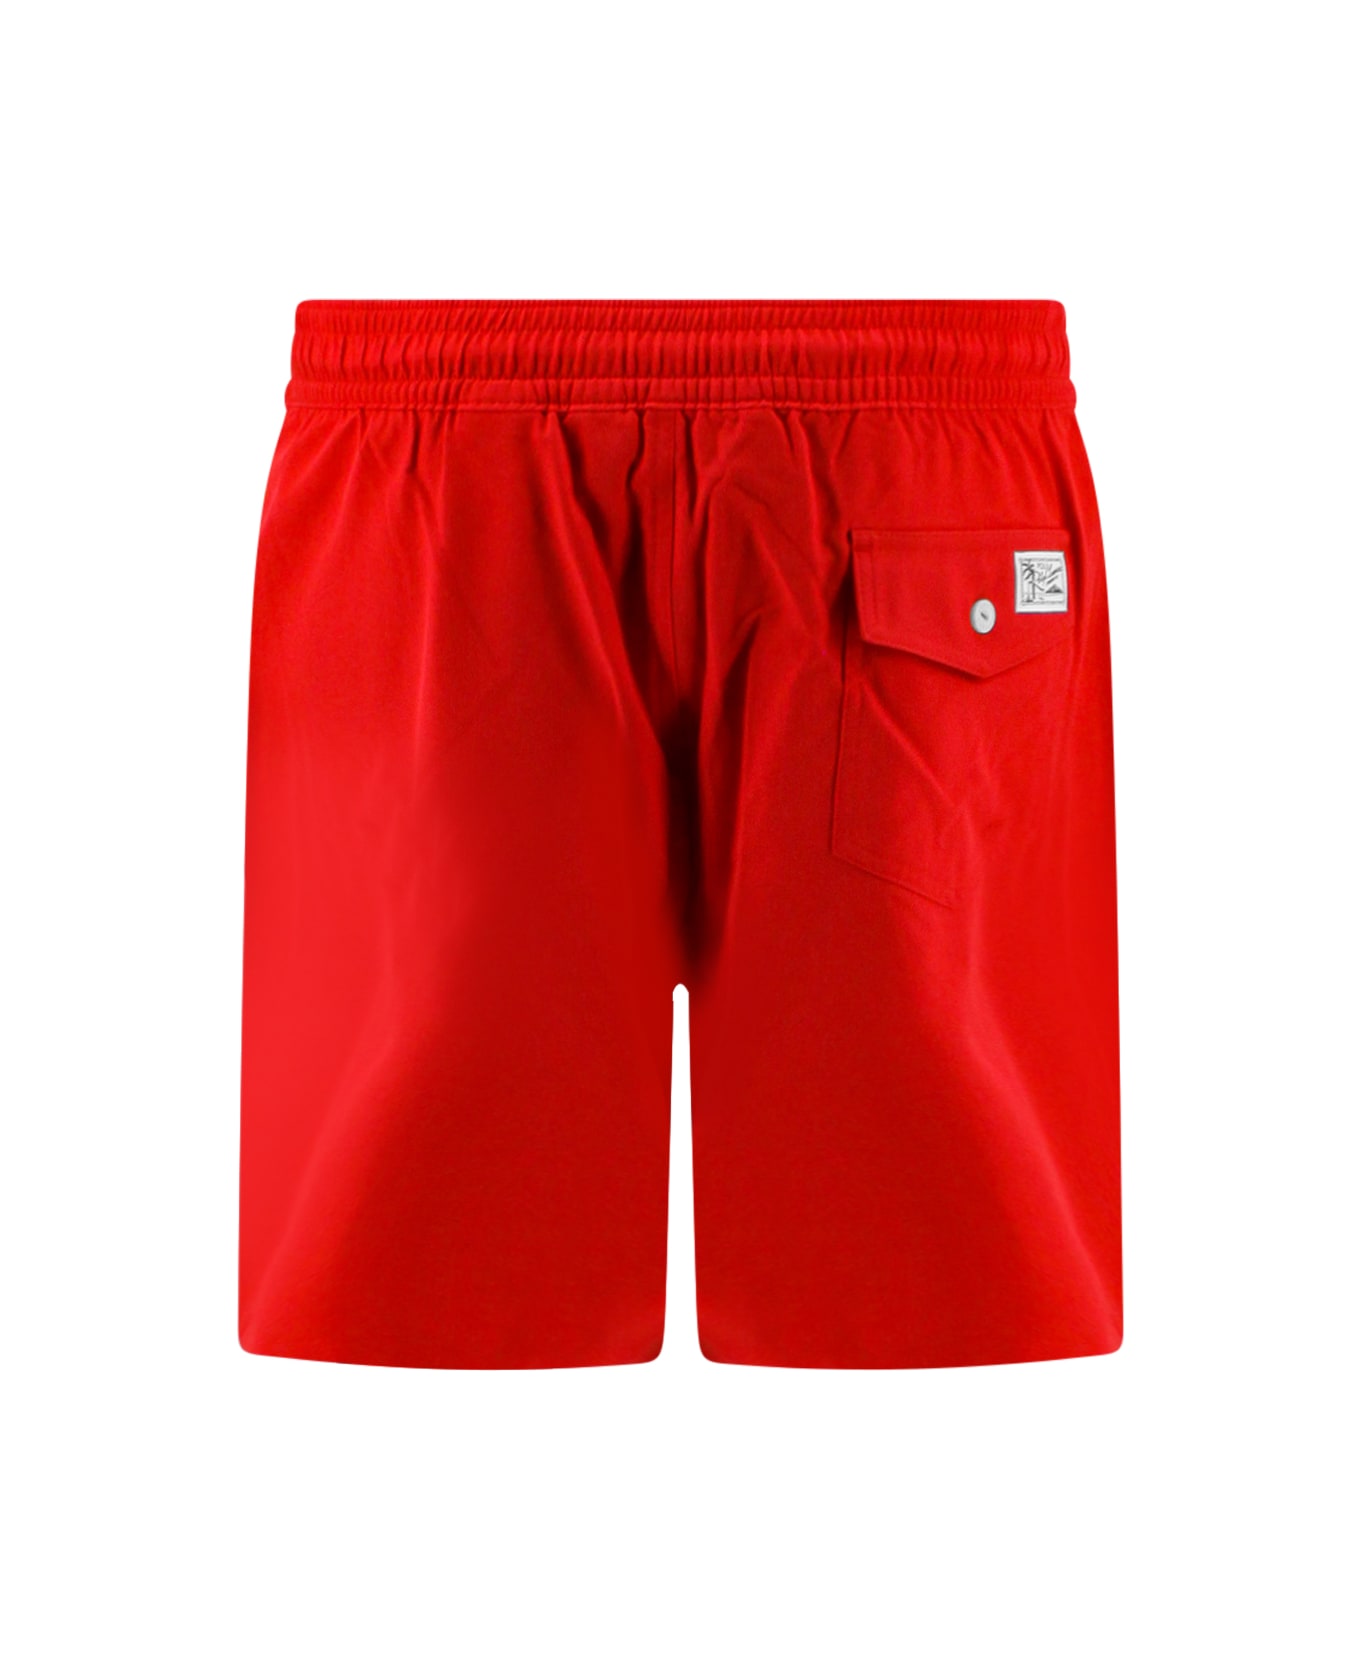 Polo Ralph Lauren Swim Trunks Swimwear - RED